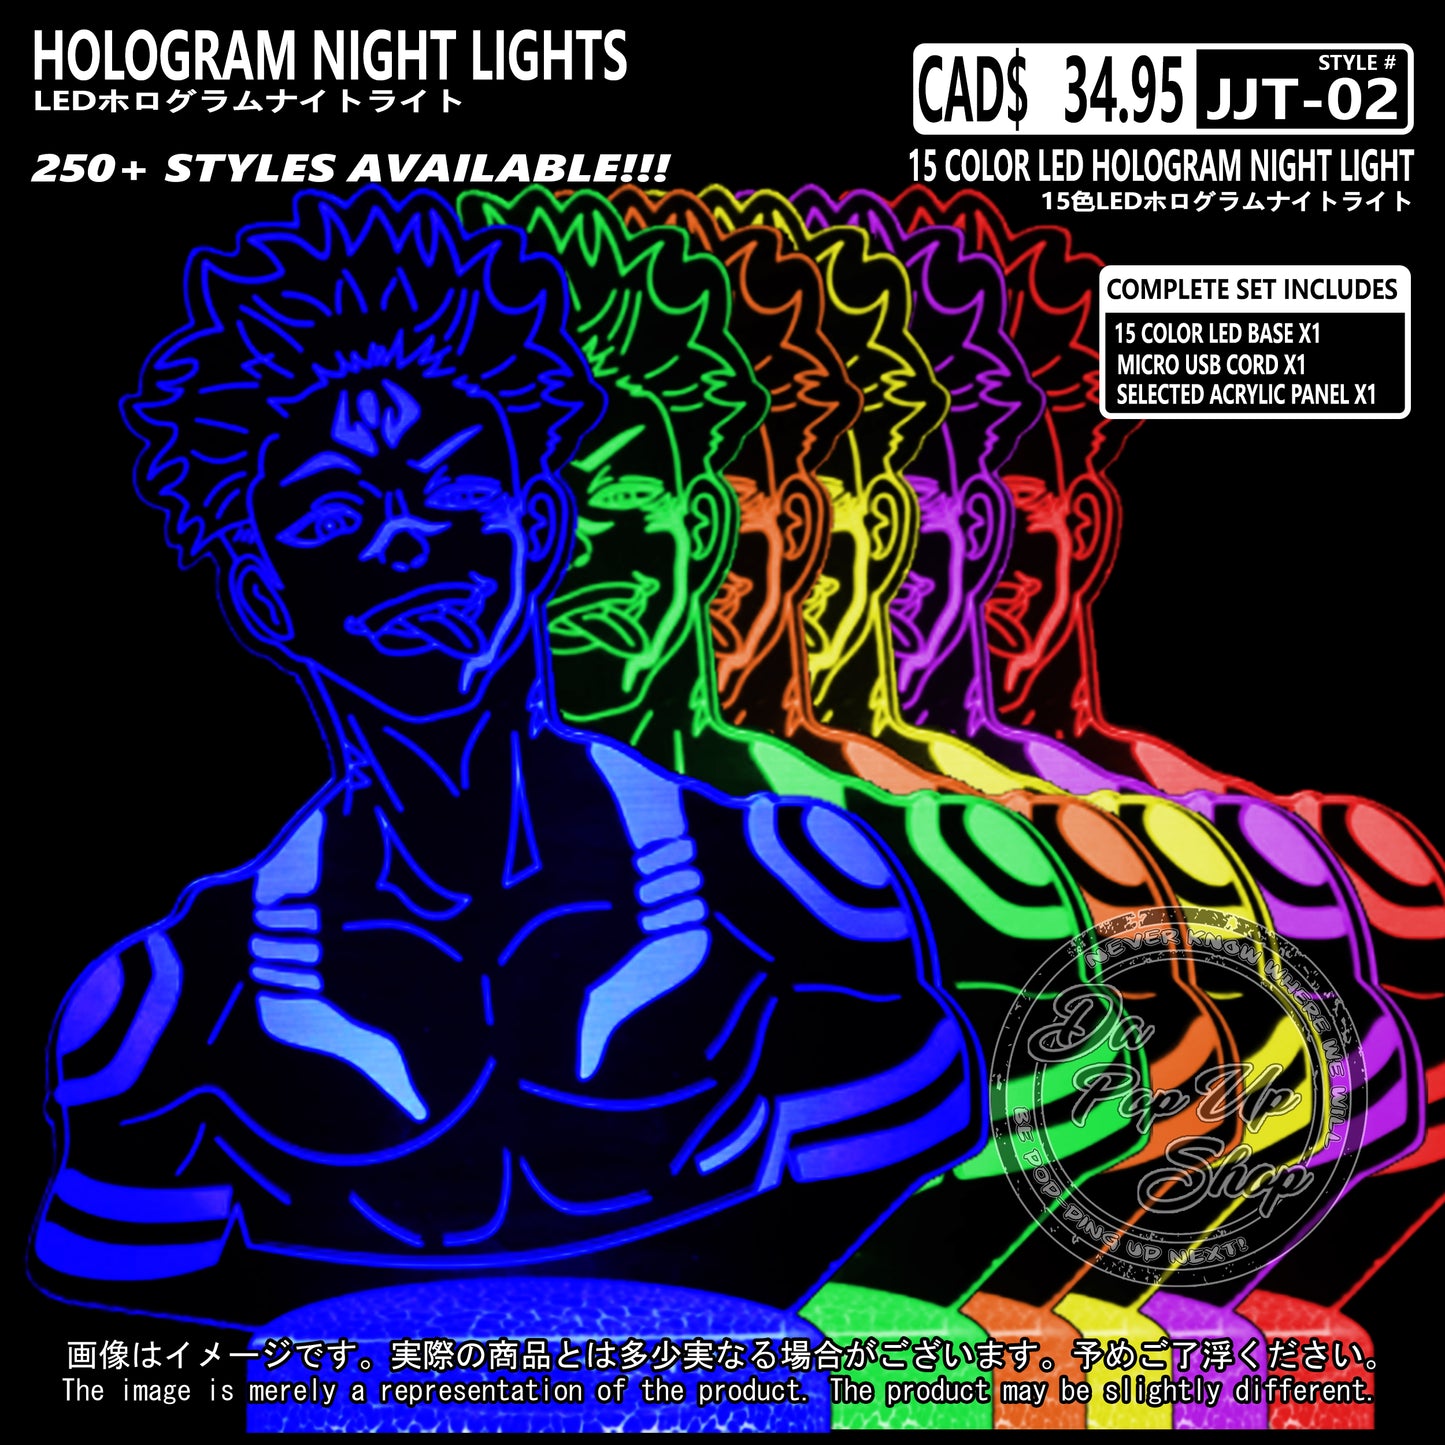 (JJT-02) Jujutsu Kaisen Hologram LED Night Light